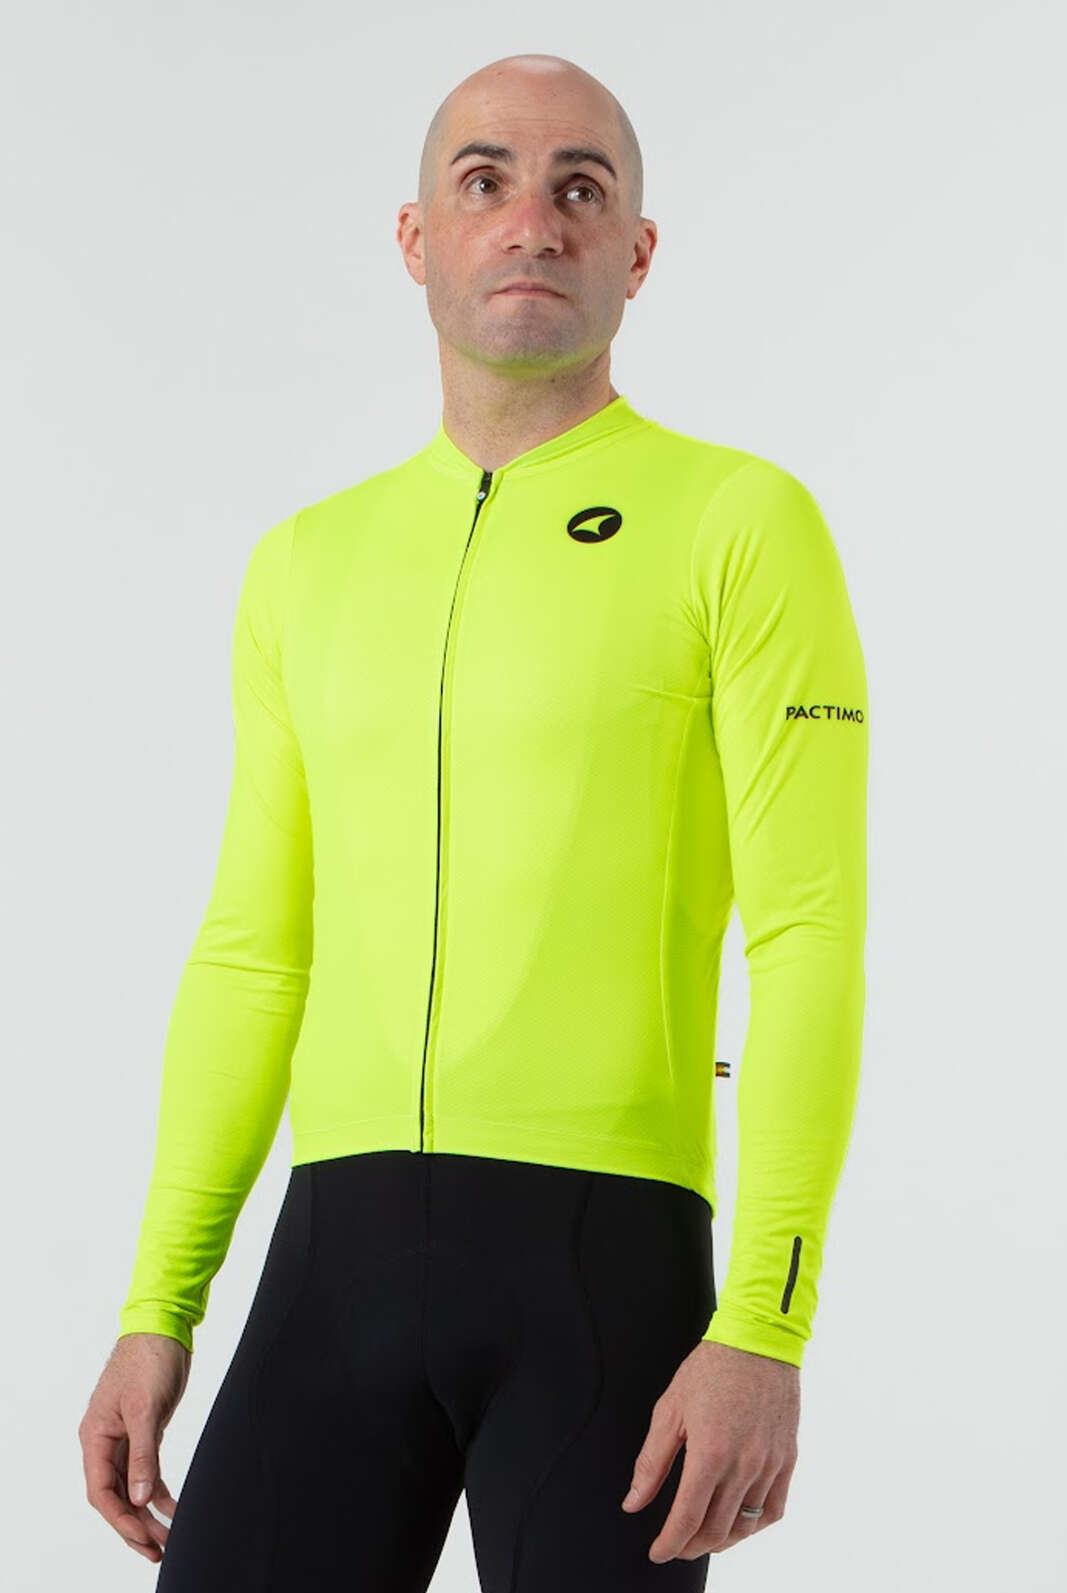 Men's High-Viz Yellow Aero Long Sleeve Cycling Jersey - Ascent Front View